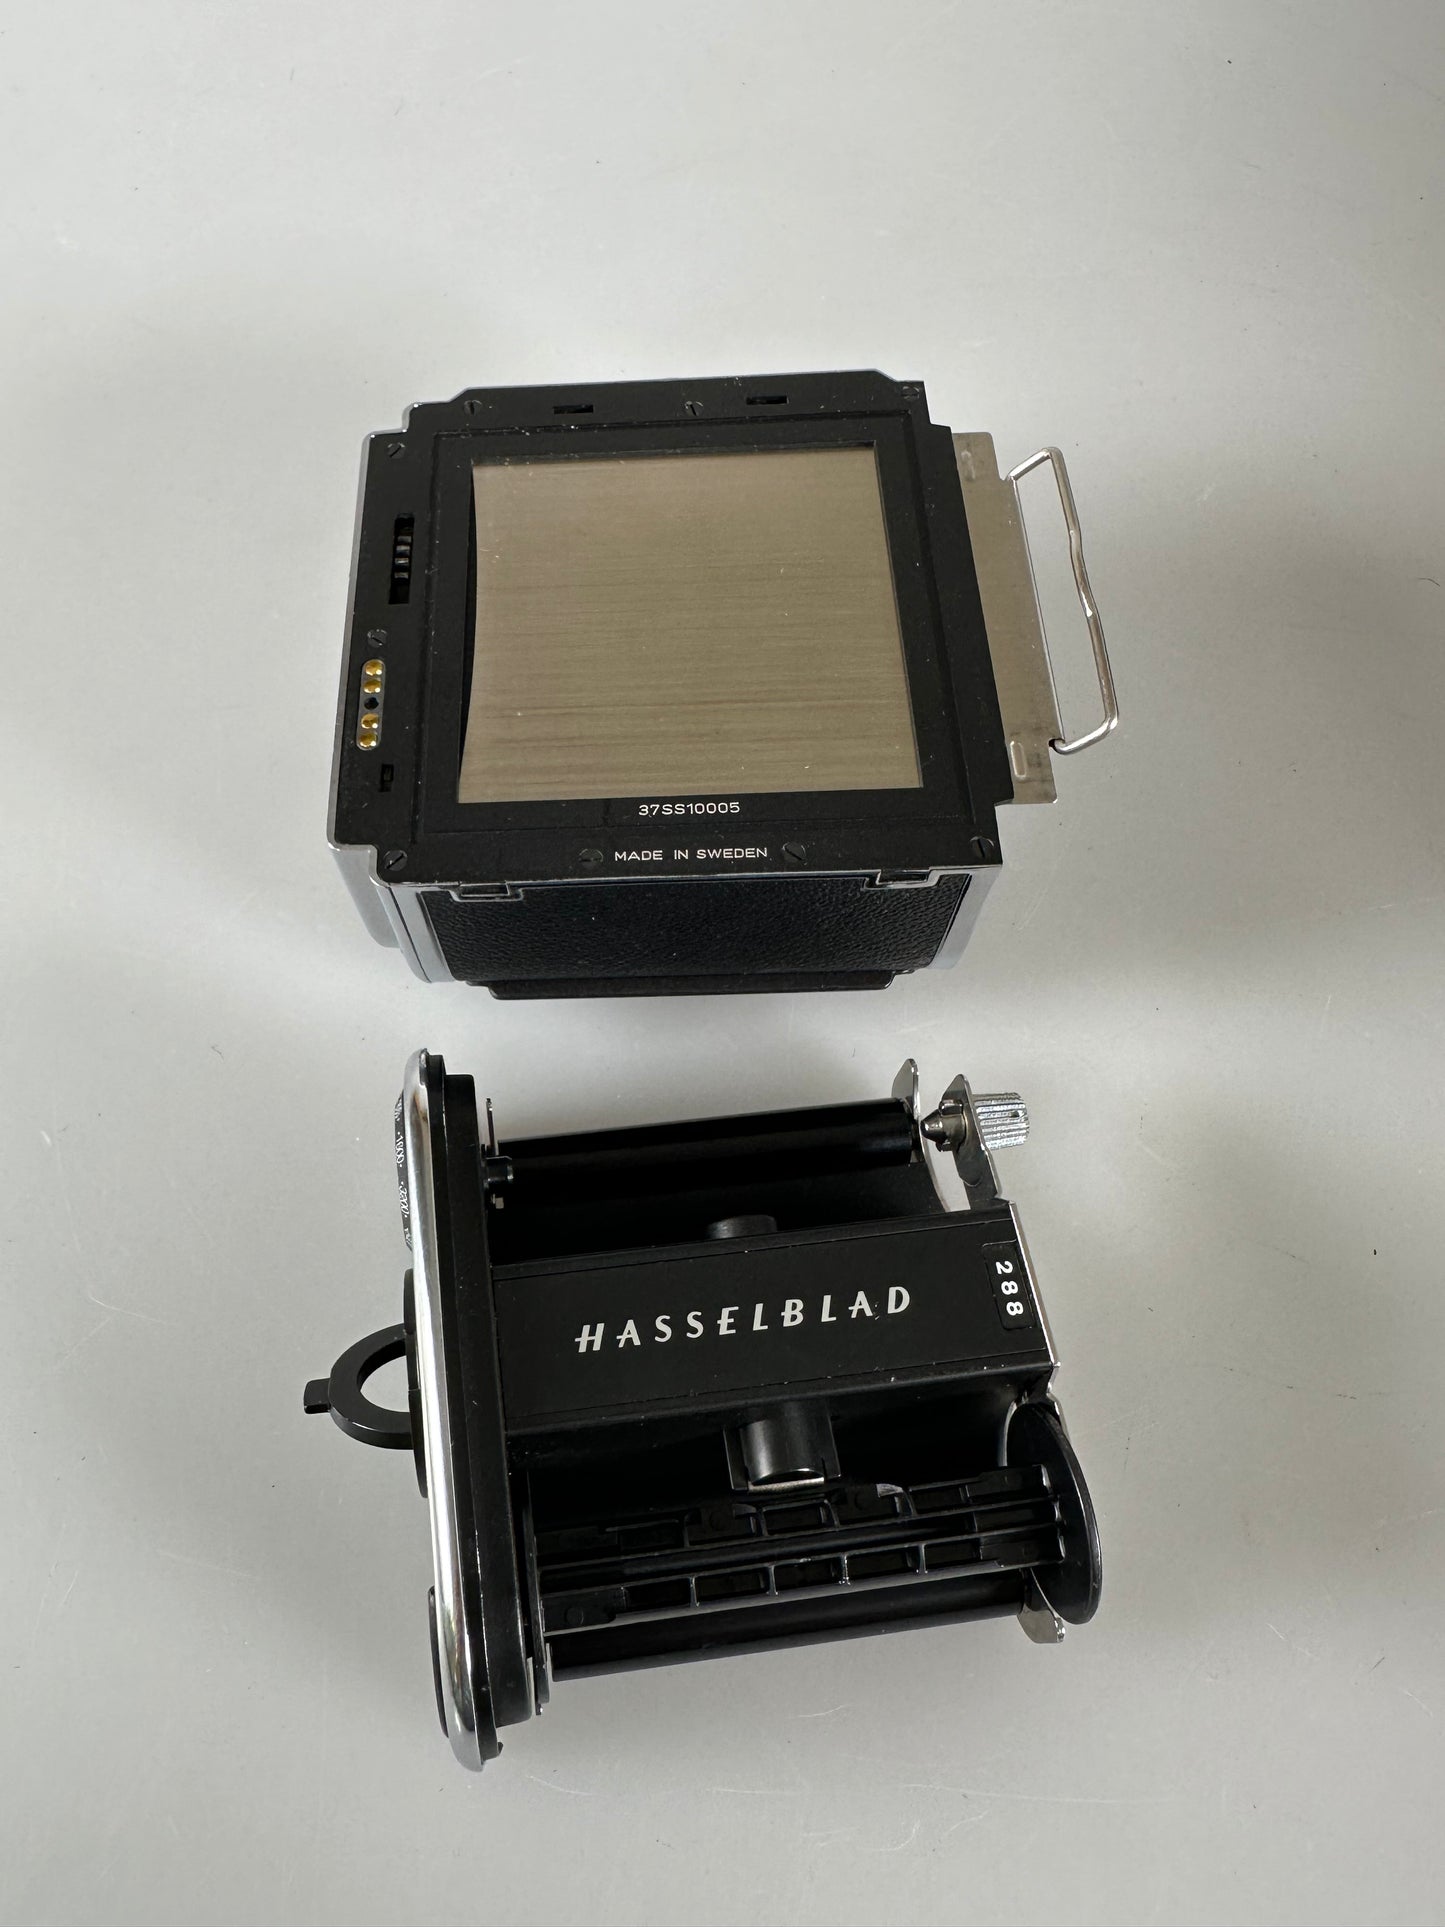 Hasselblad Film Back E16 Type IV 6 x 4.5 2000 Series